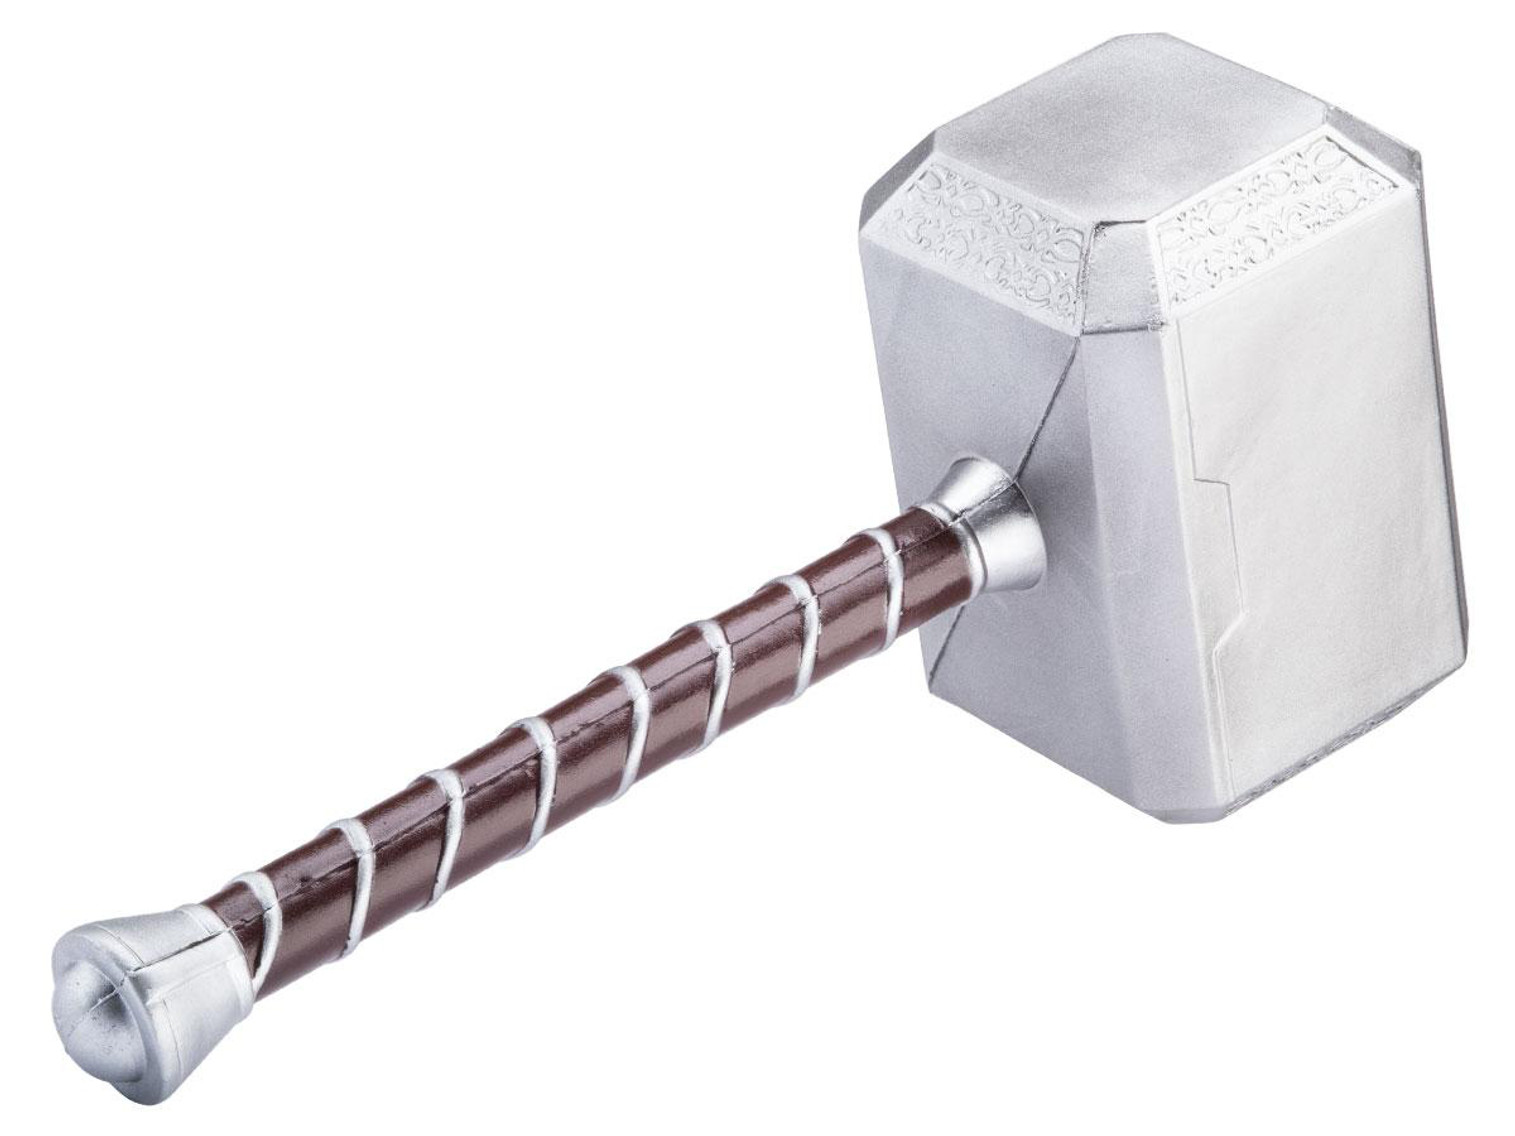 Replica PU Foam Prop for Cosplay & LARP (Model: Thunder Hammer)